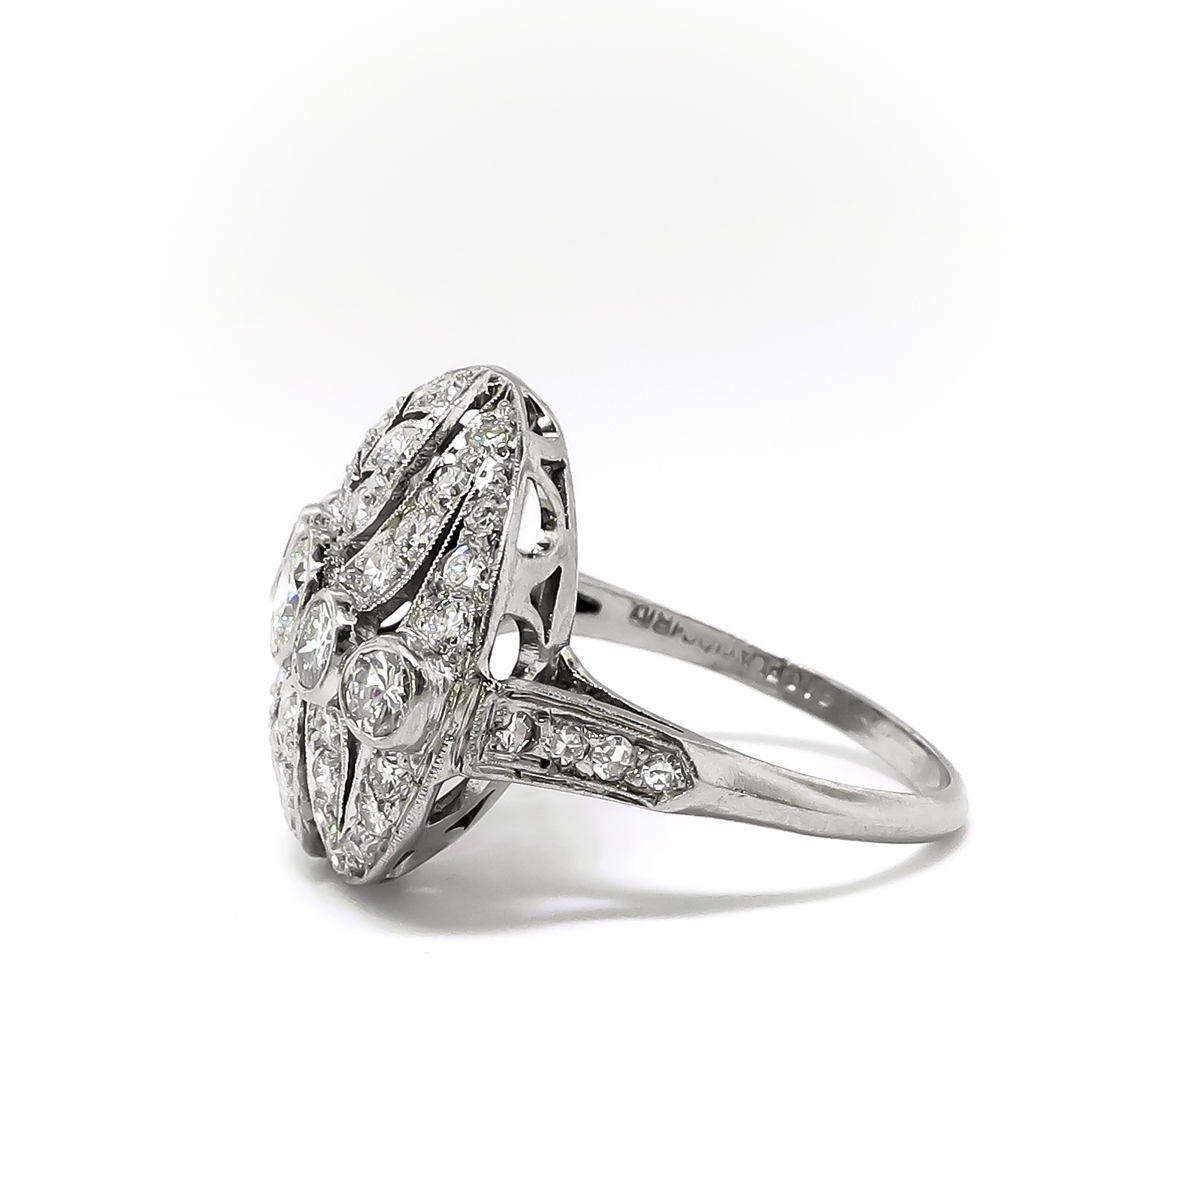 Edwardian 1920's Cocktail Ring Old Cut Diamonds Platinum | Antique ...